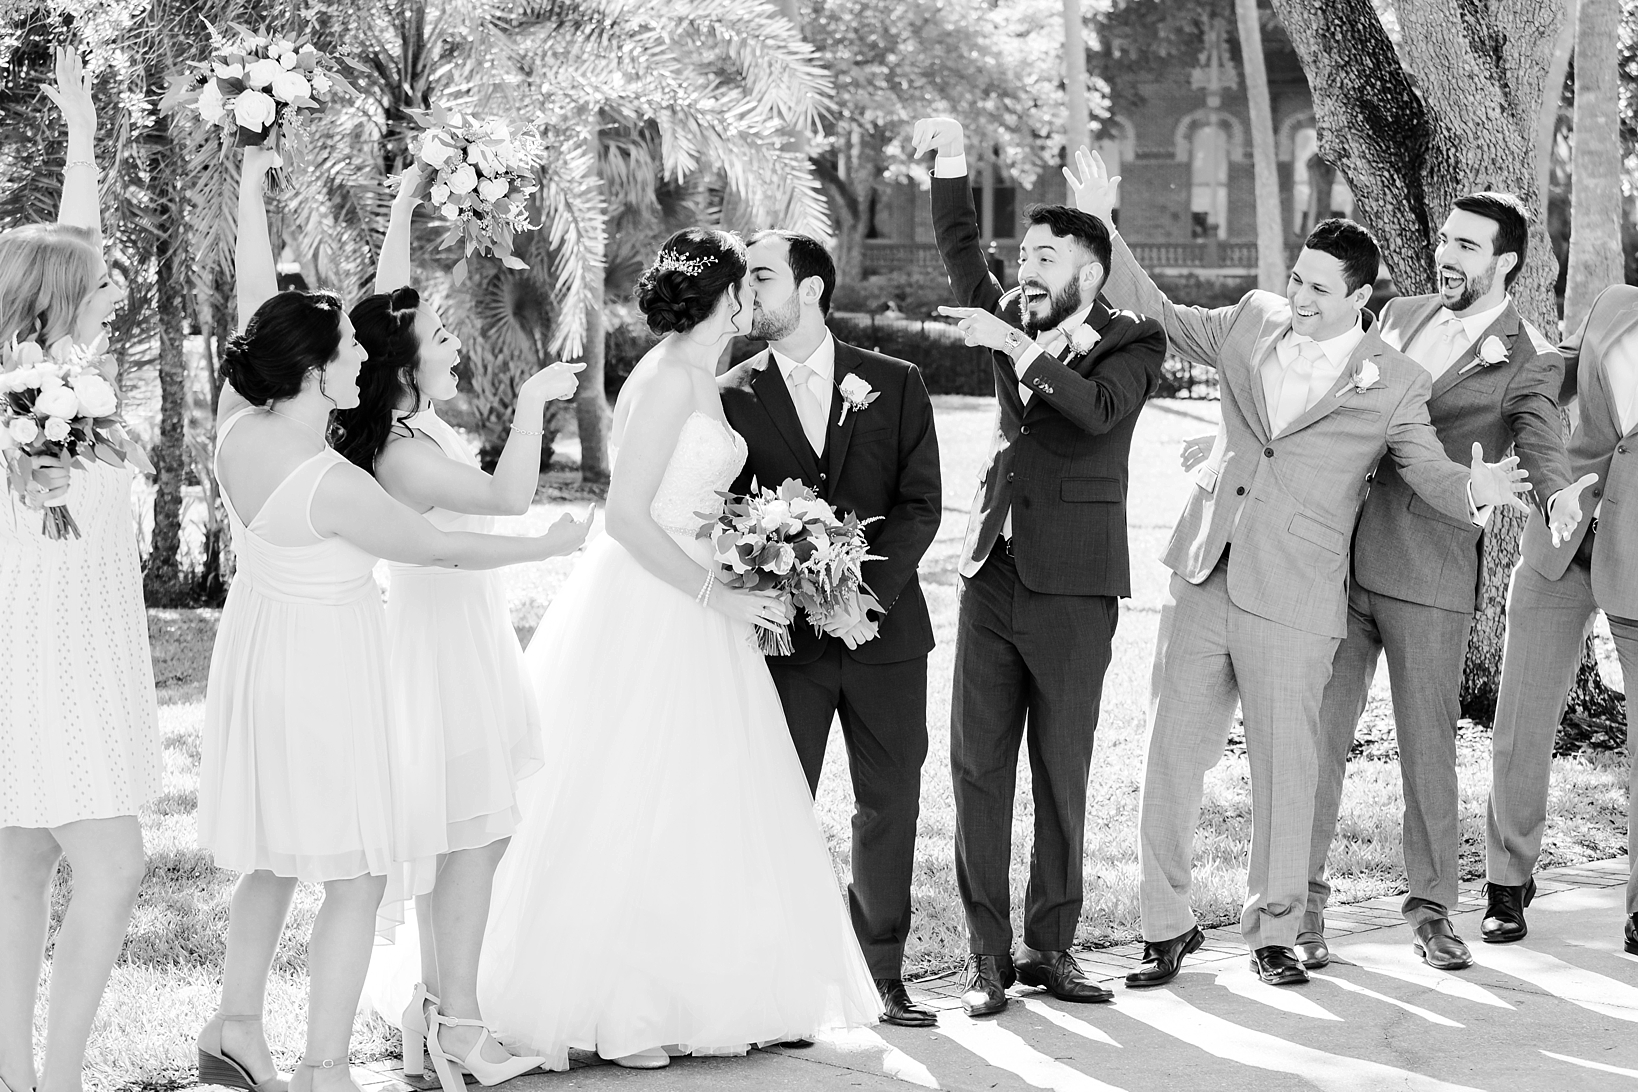 Black and white photo of the wedding party celebrating the newlyweds kissing